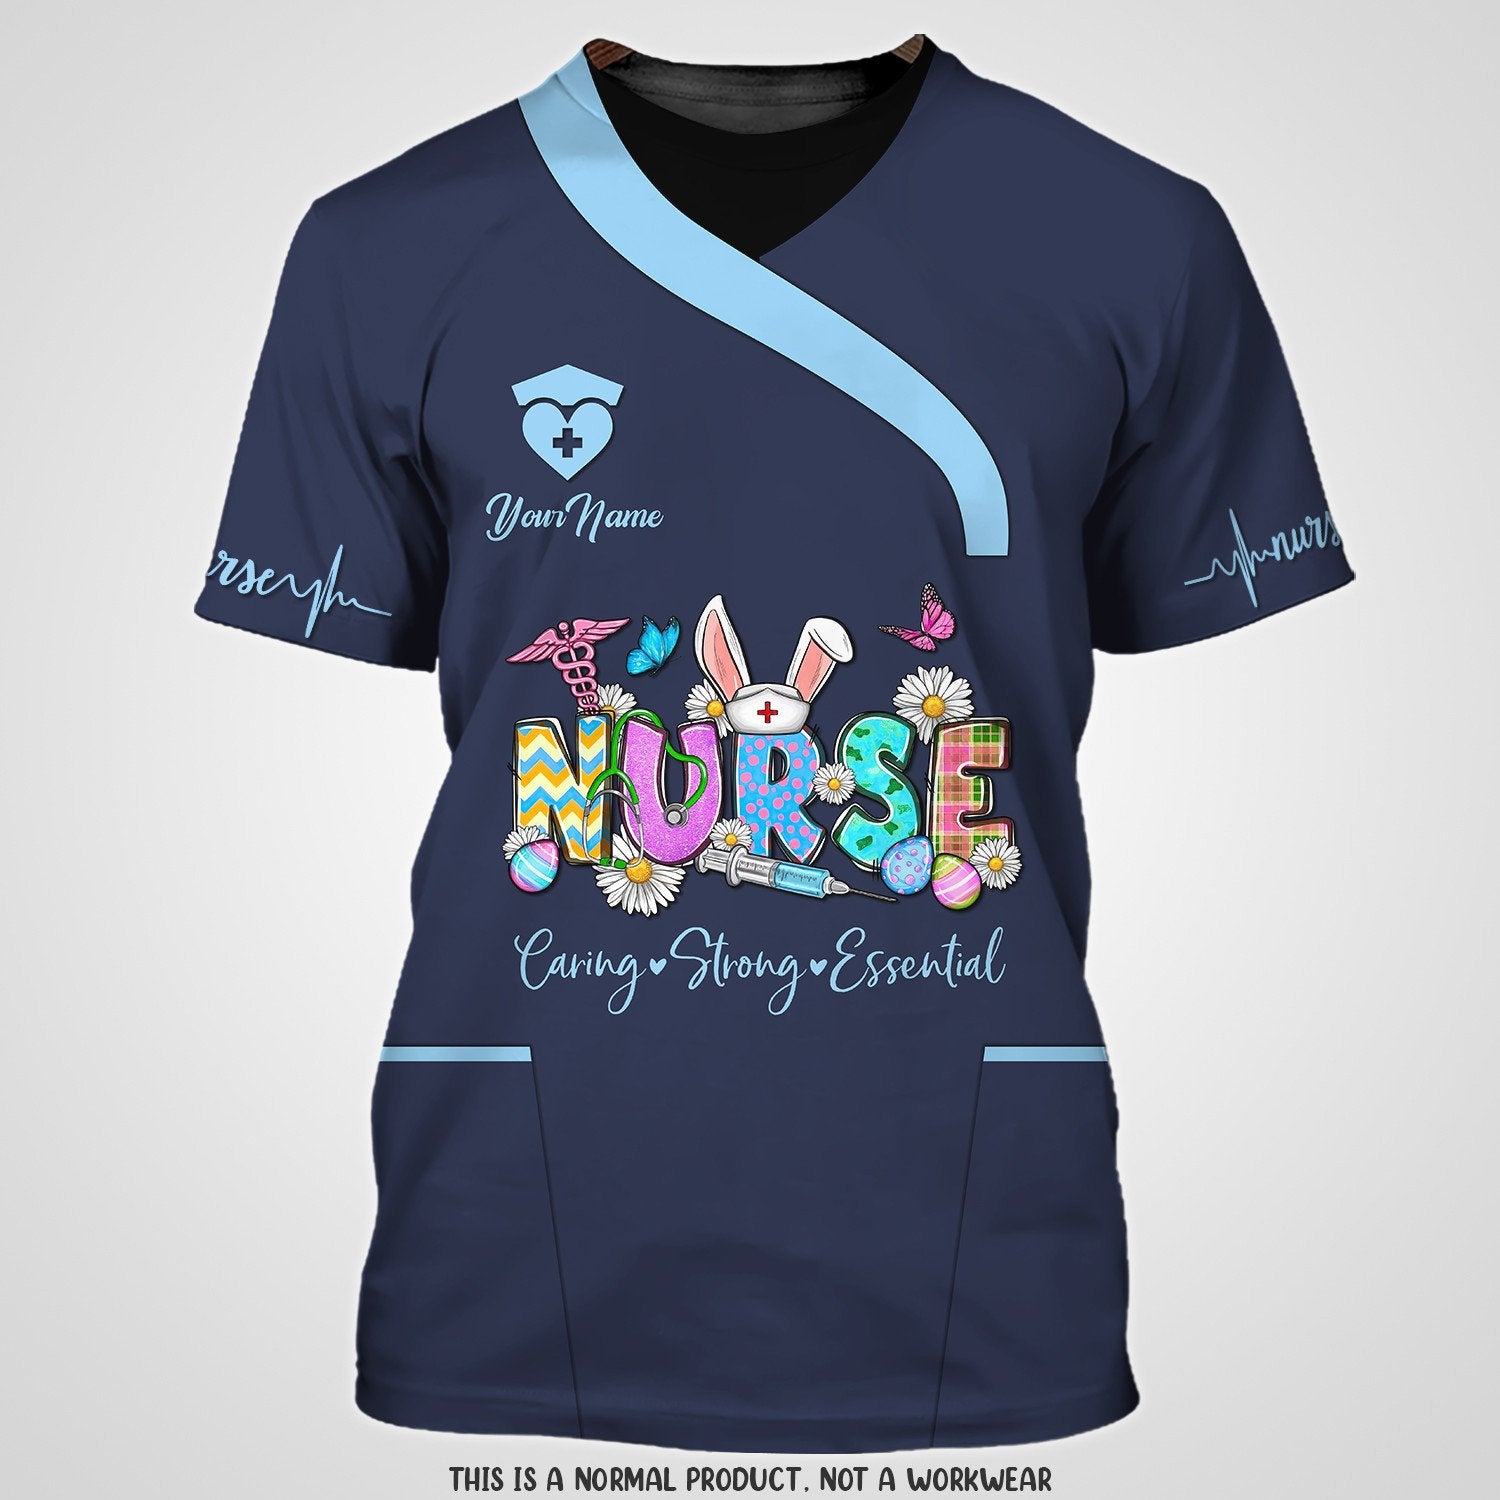 Nurse Earing Strong Essential Tee Shirt Custom Nurse Uniform/ Nurse Easter Day Shirt/ Idea Gift for Her